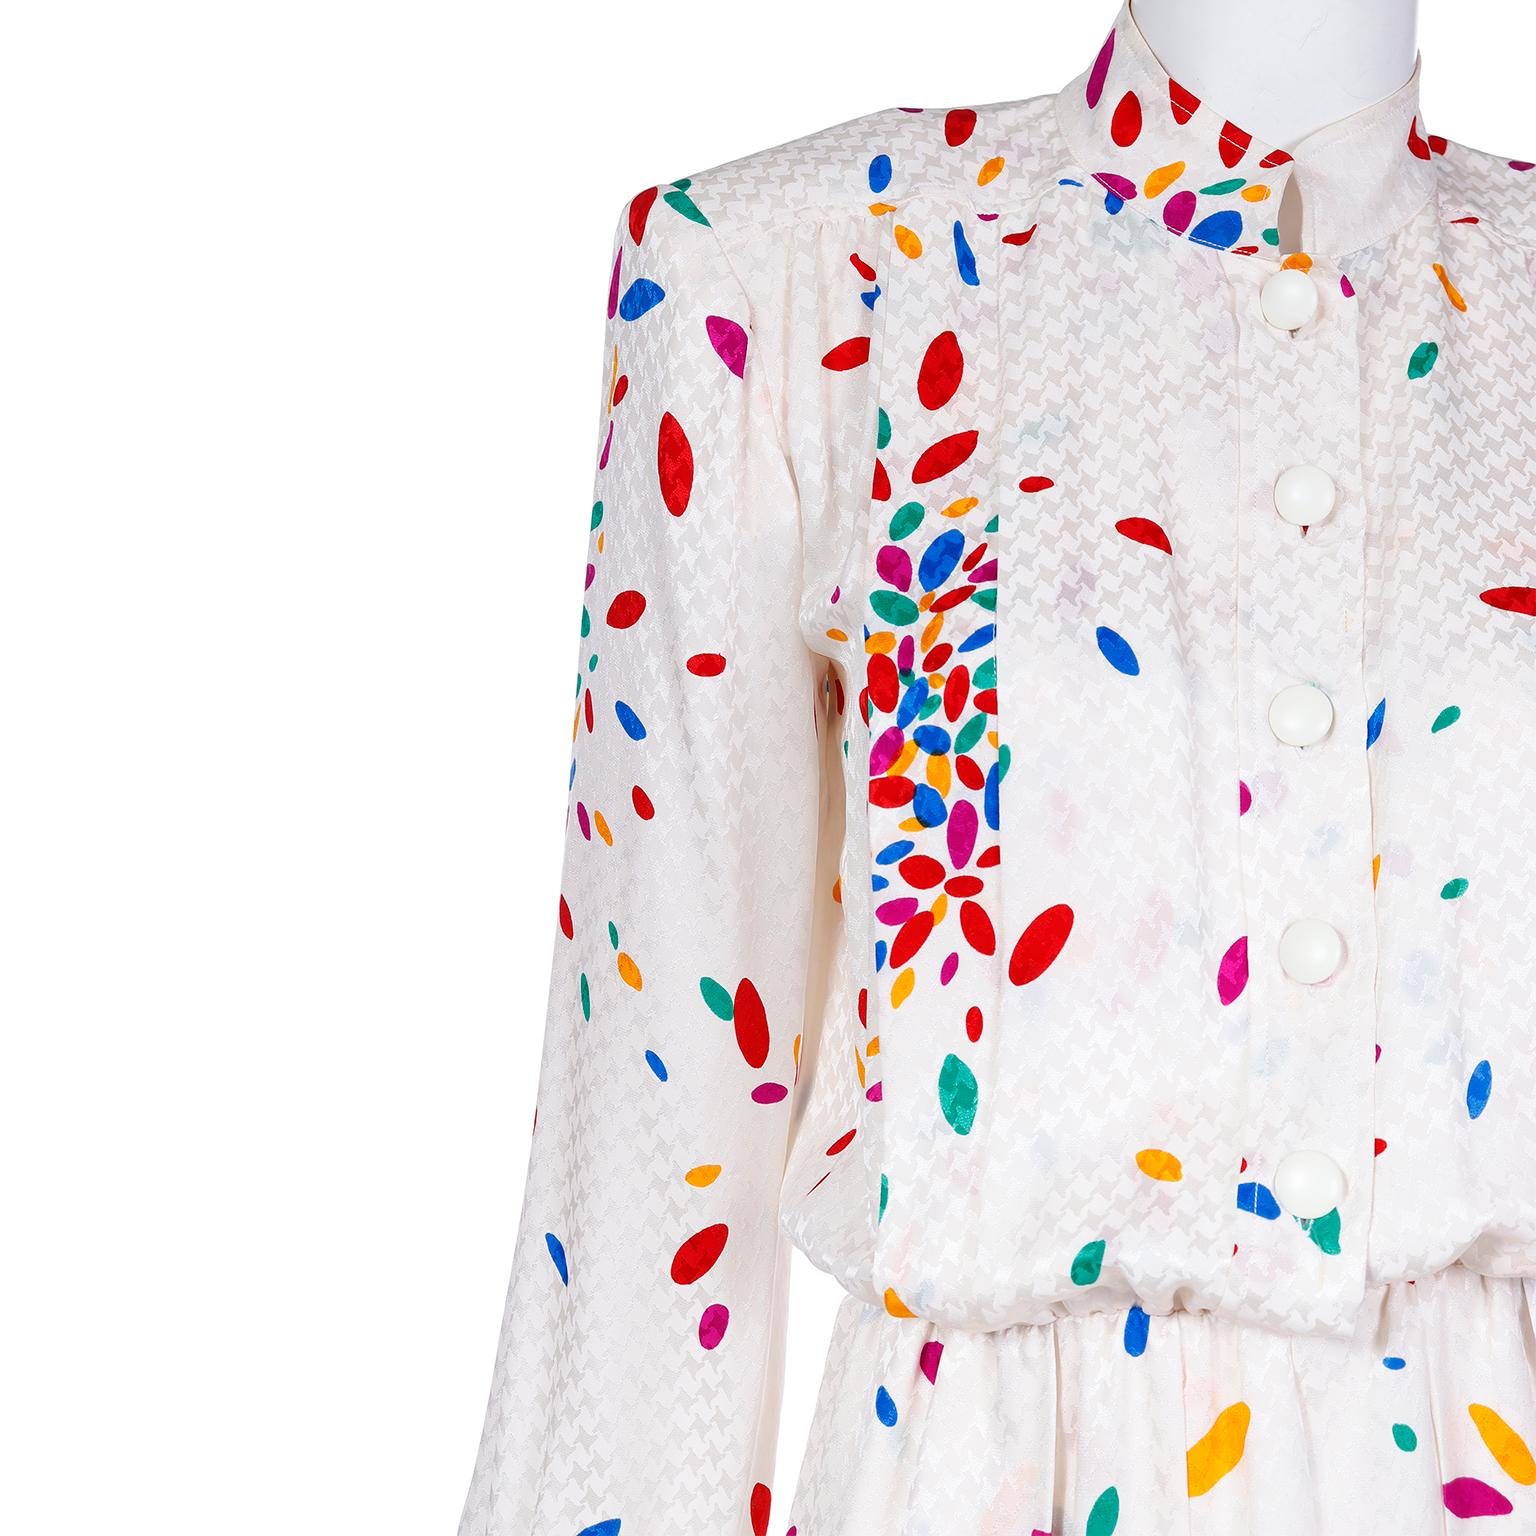 Yves Saint laurent Tonal White Print Silk Dress w Colorful Ovals & Polka Dots For Sale 5